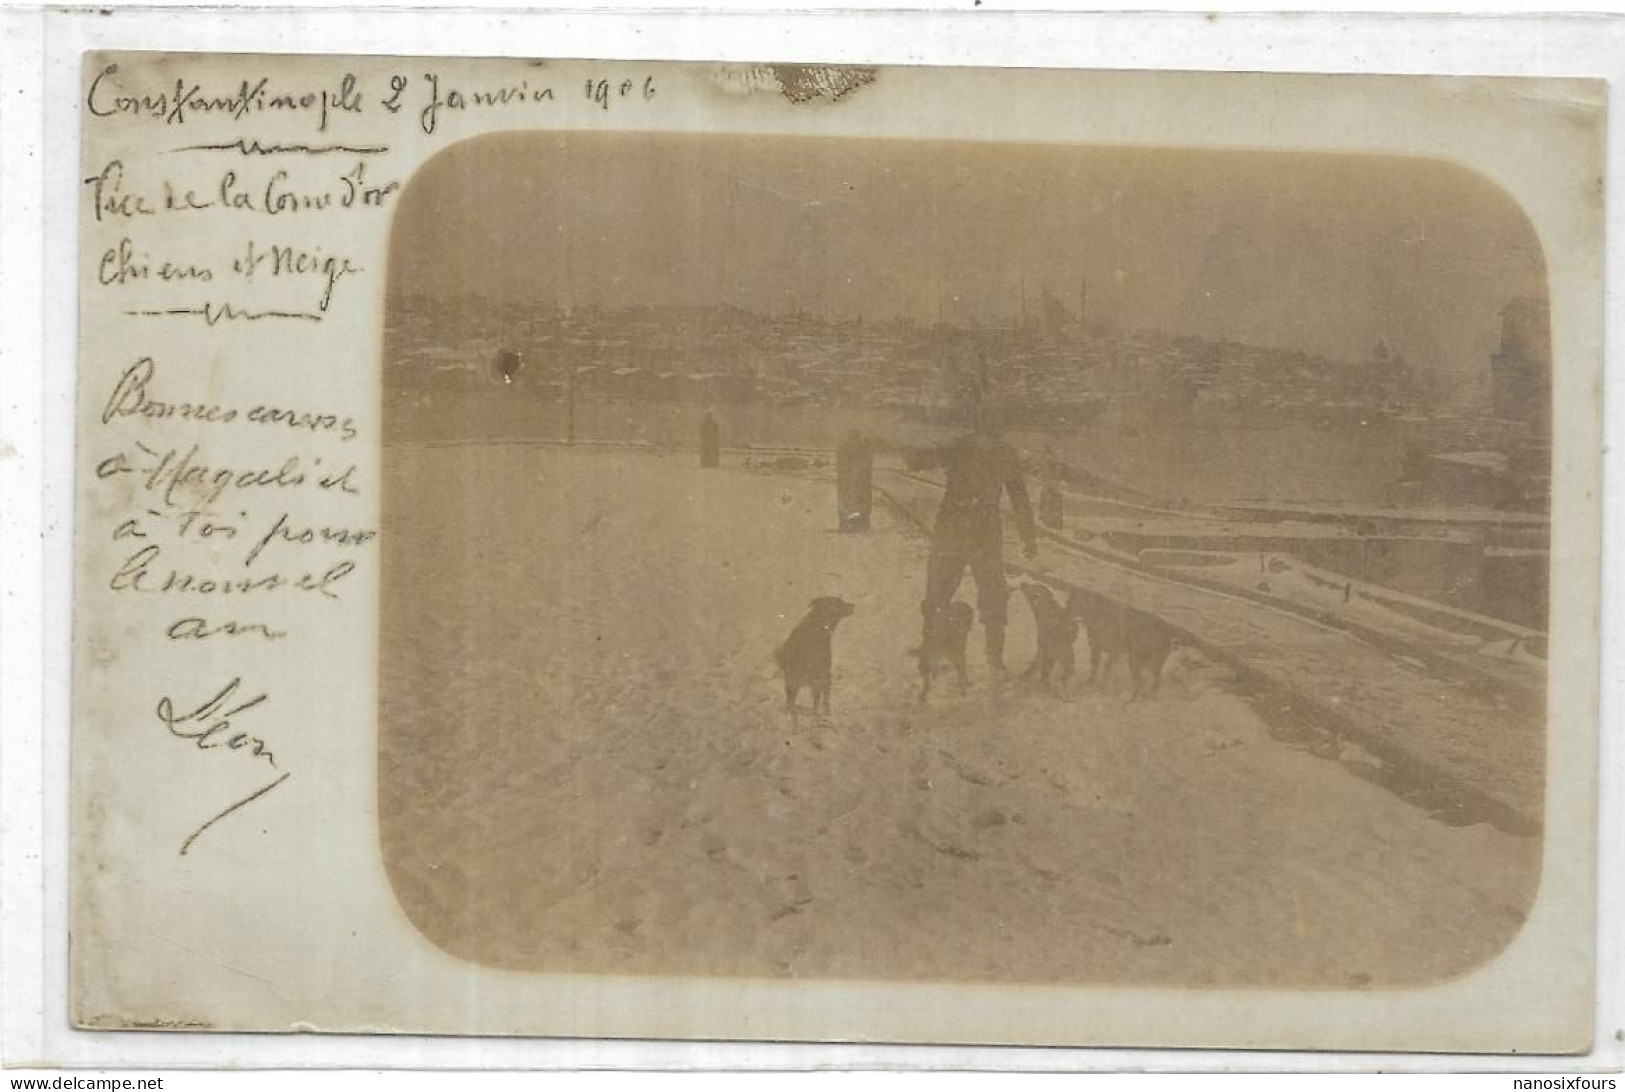 TURQUIE. CONSTANTINOPLE. 2 JANVIER 1906 CARTE PHOTOS CHIENS ET NEIGE CARTE ECRITE - Turkije